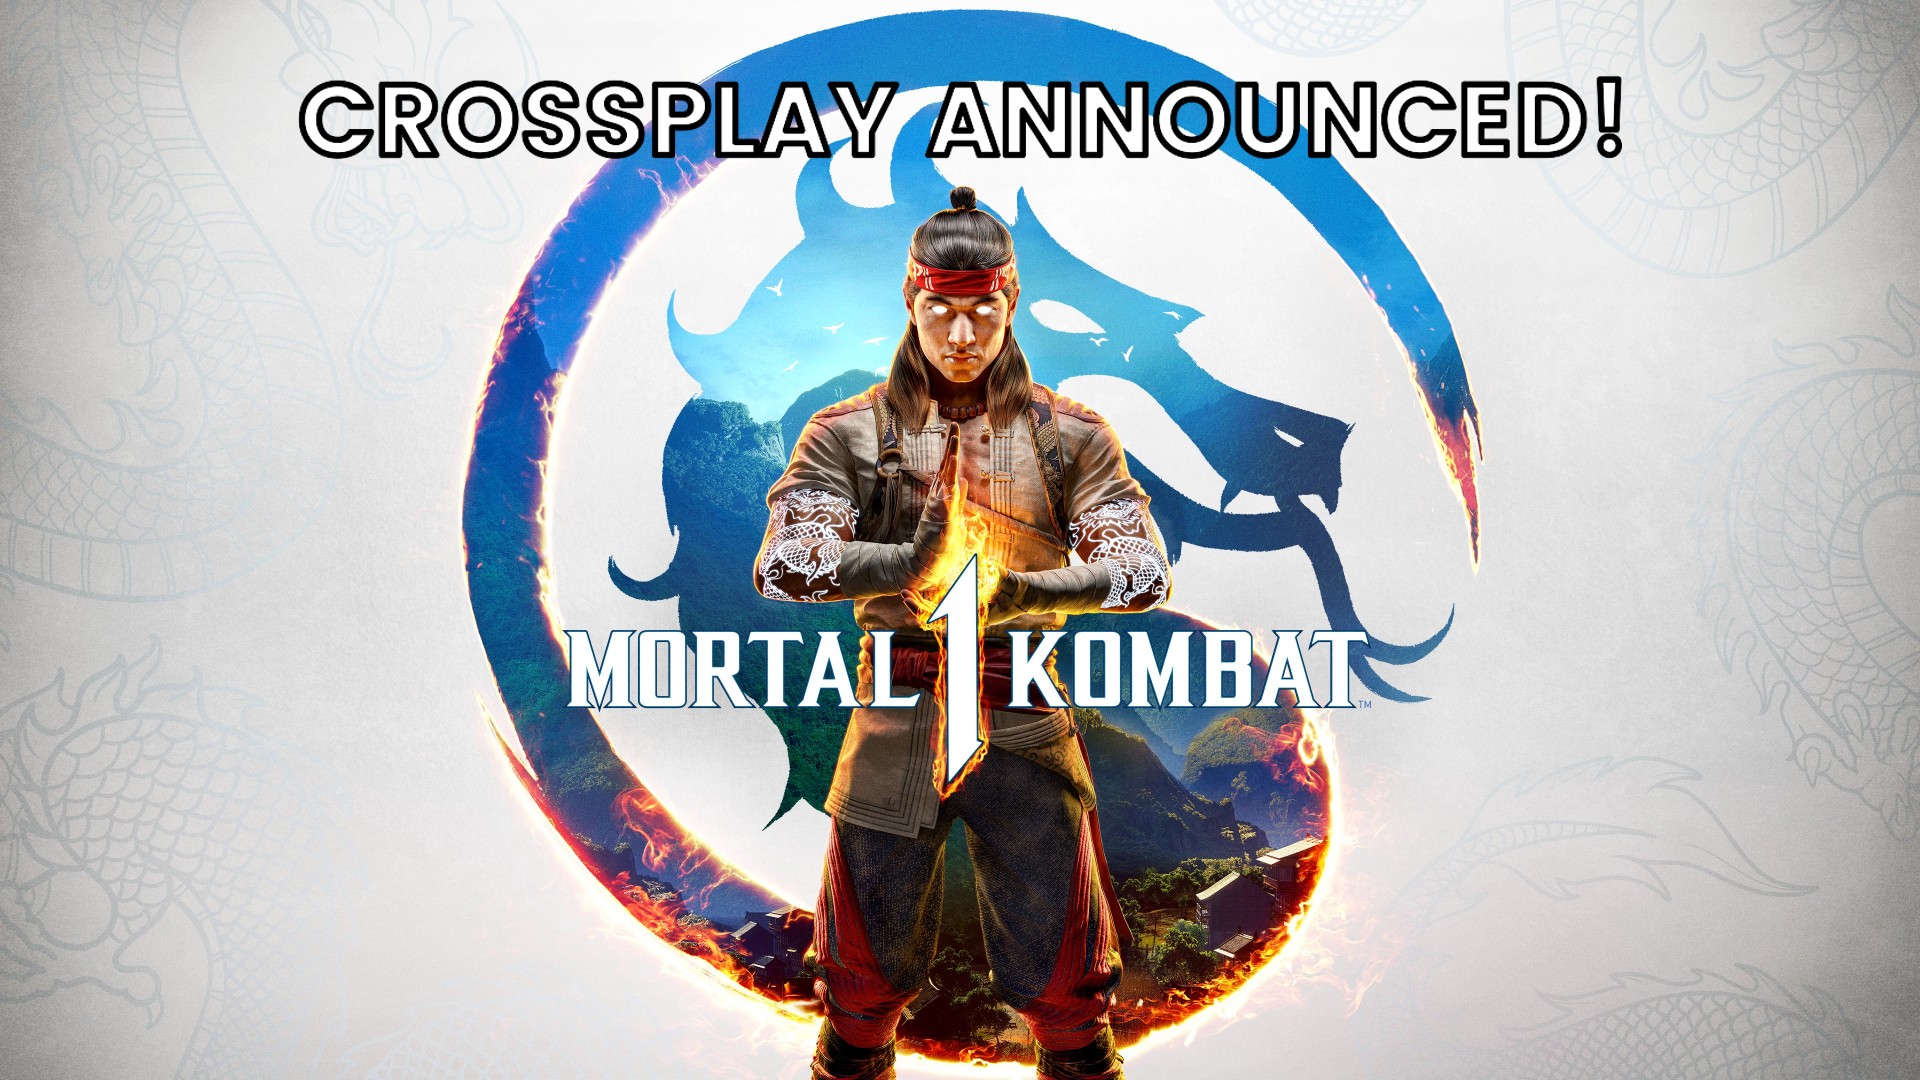 Mortal Kombat X gets an ESL Pro League; preseason starts April 19